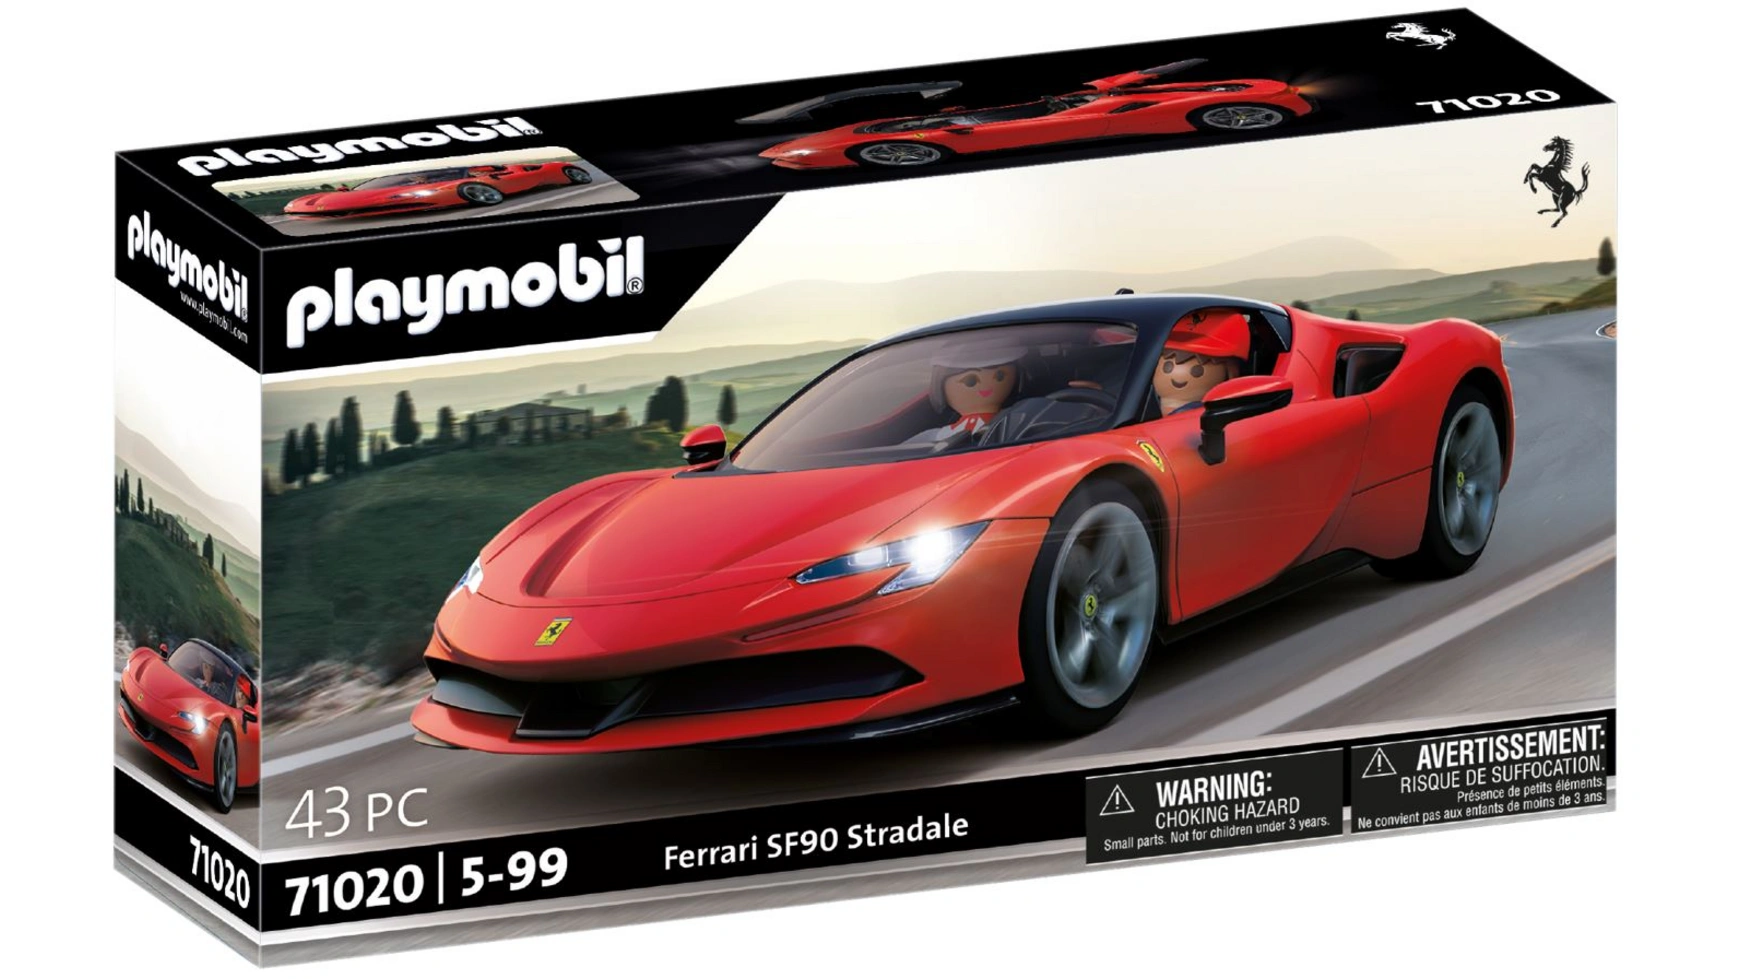 Ferrari sf90 stradale Playmobil bburago 1 24 scale ferrari sf90 stradale alloy luxury vehicle diecast cars model toy collection gift